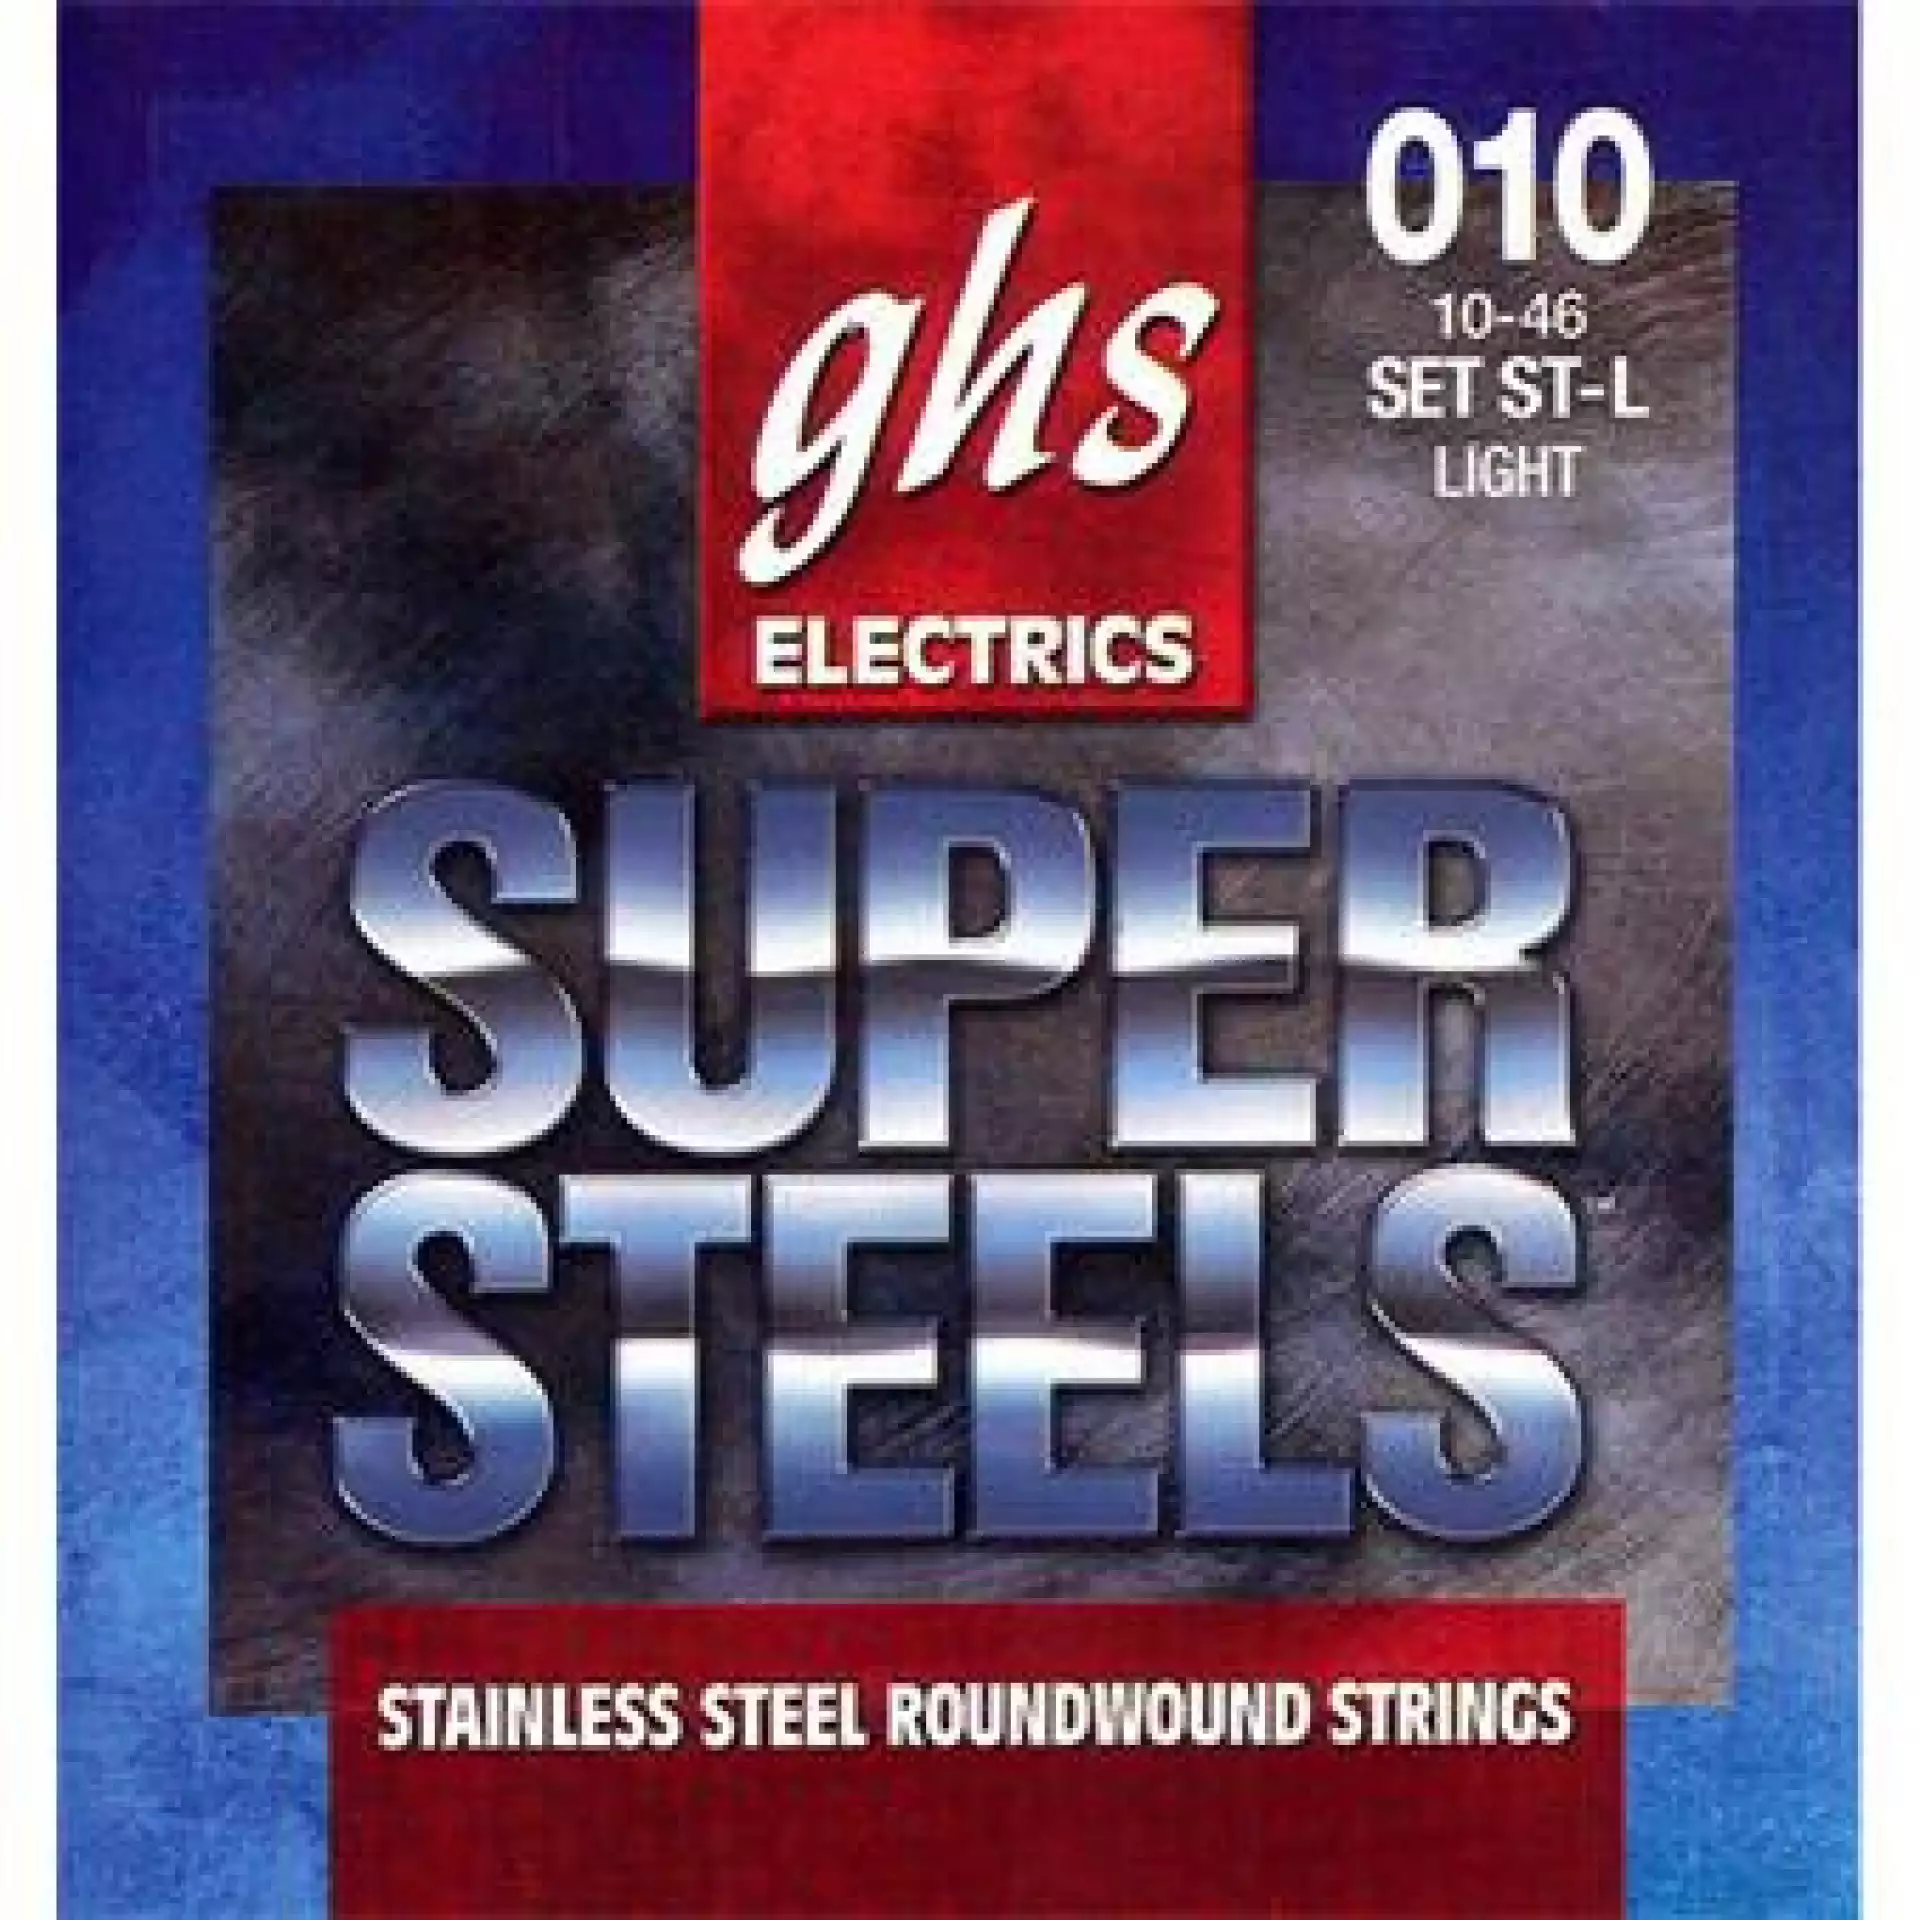 GHS ST-L Light Super Steels Electric Guitar Strings